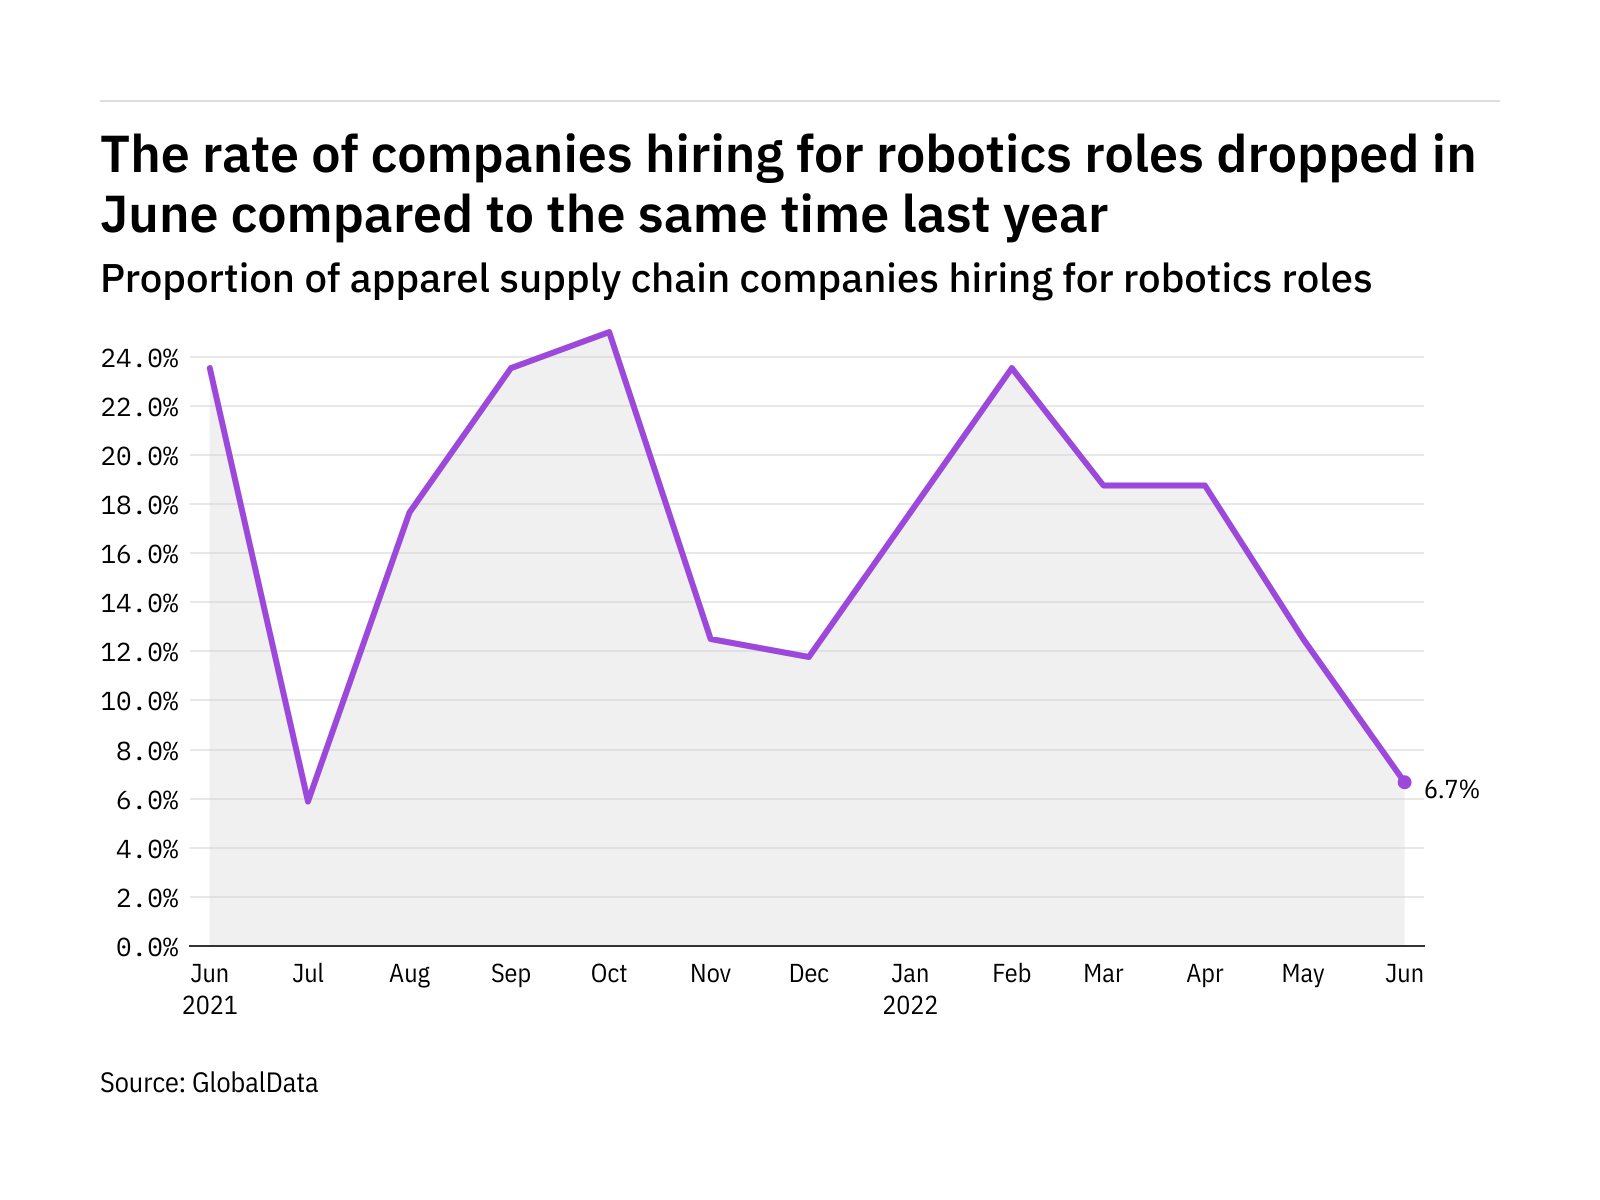 Apparel industry robotics hiring levels dropped in June